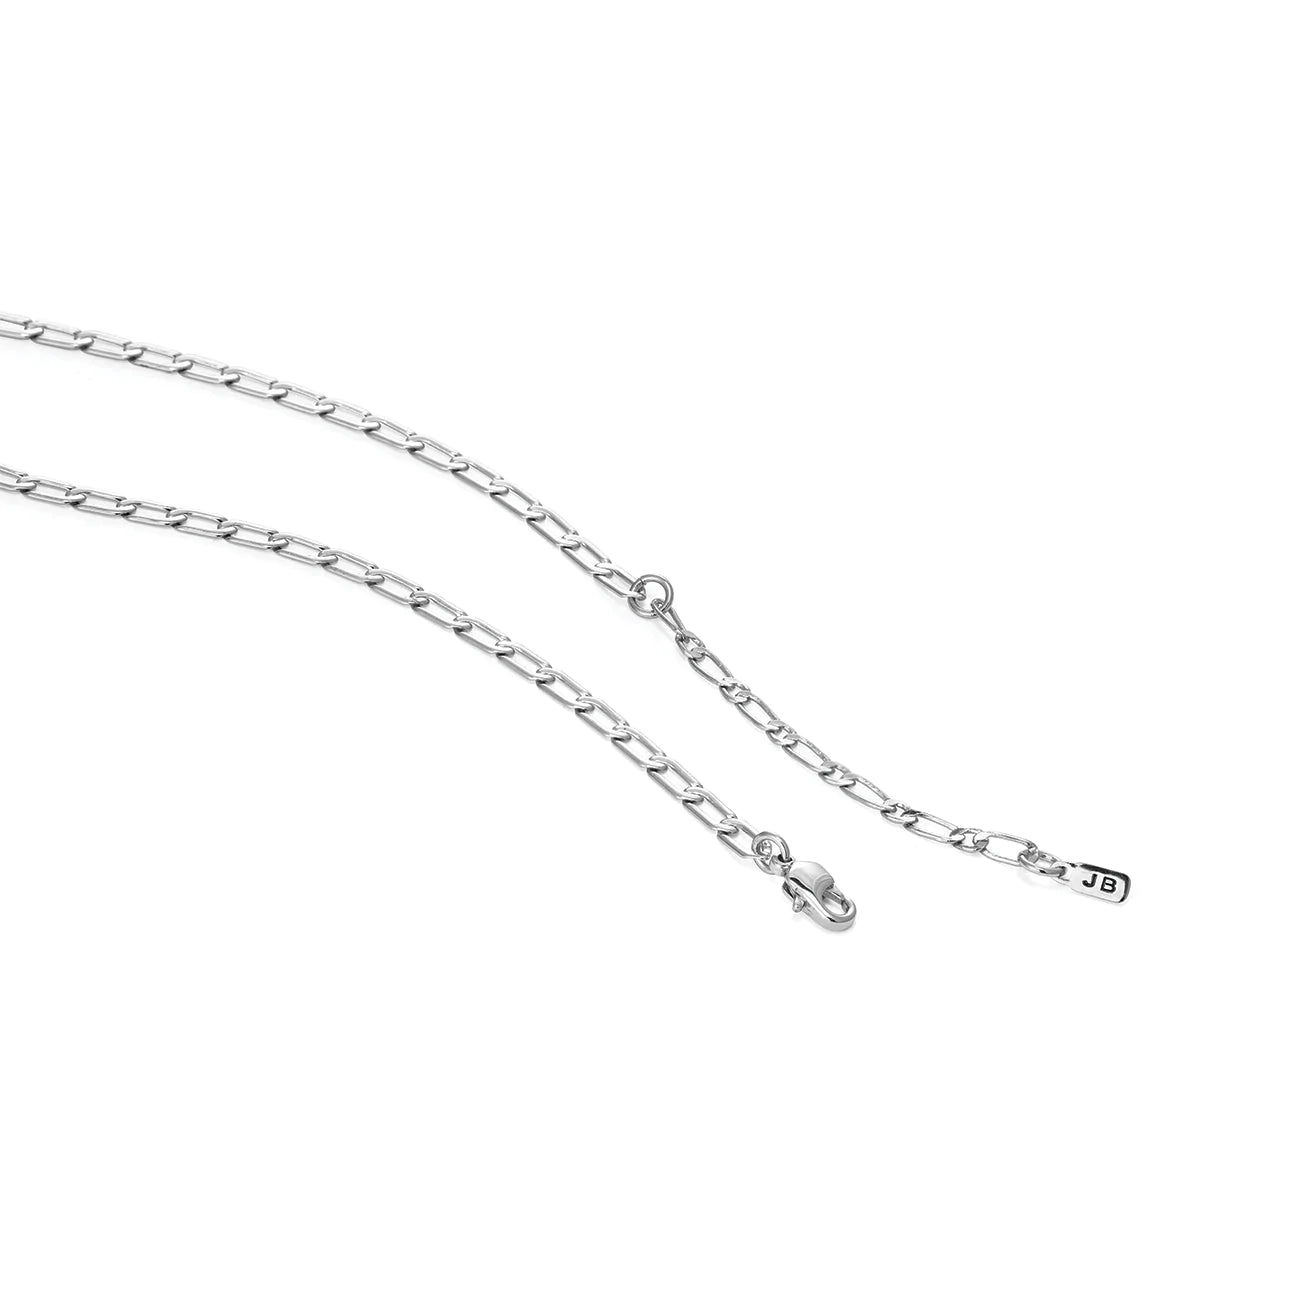 Willa Slim Necklace in Silver